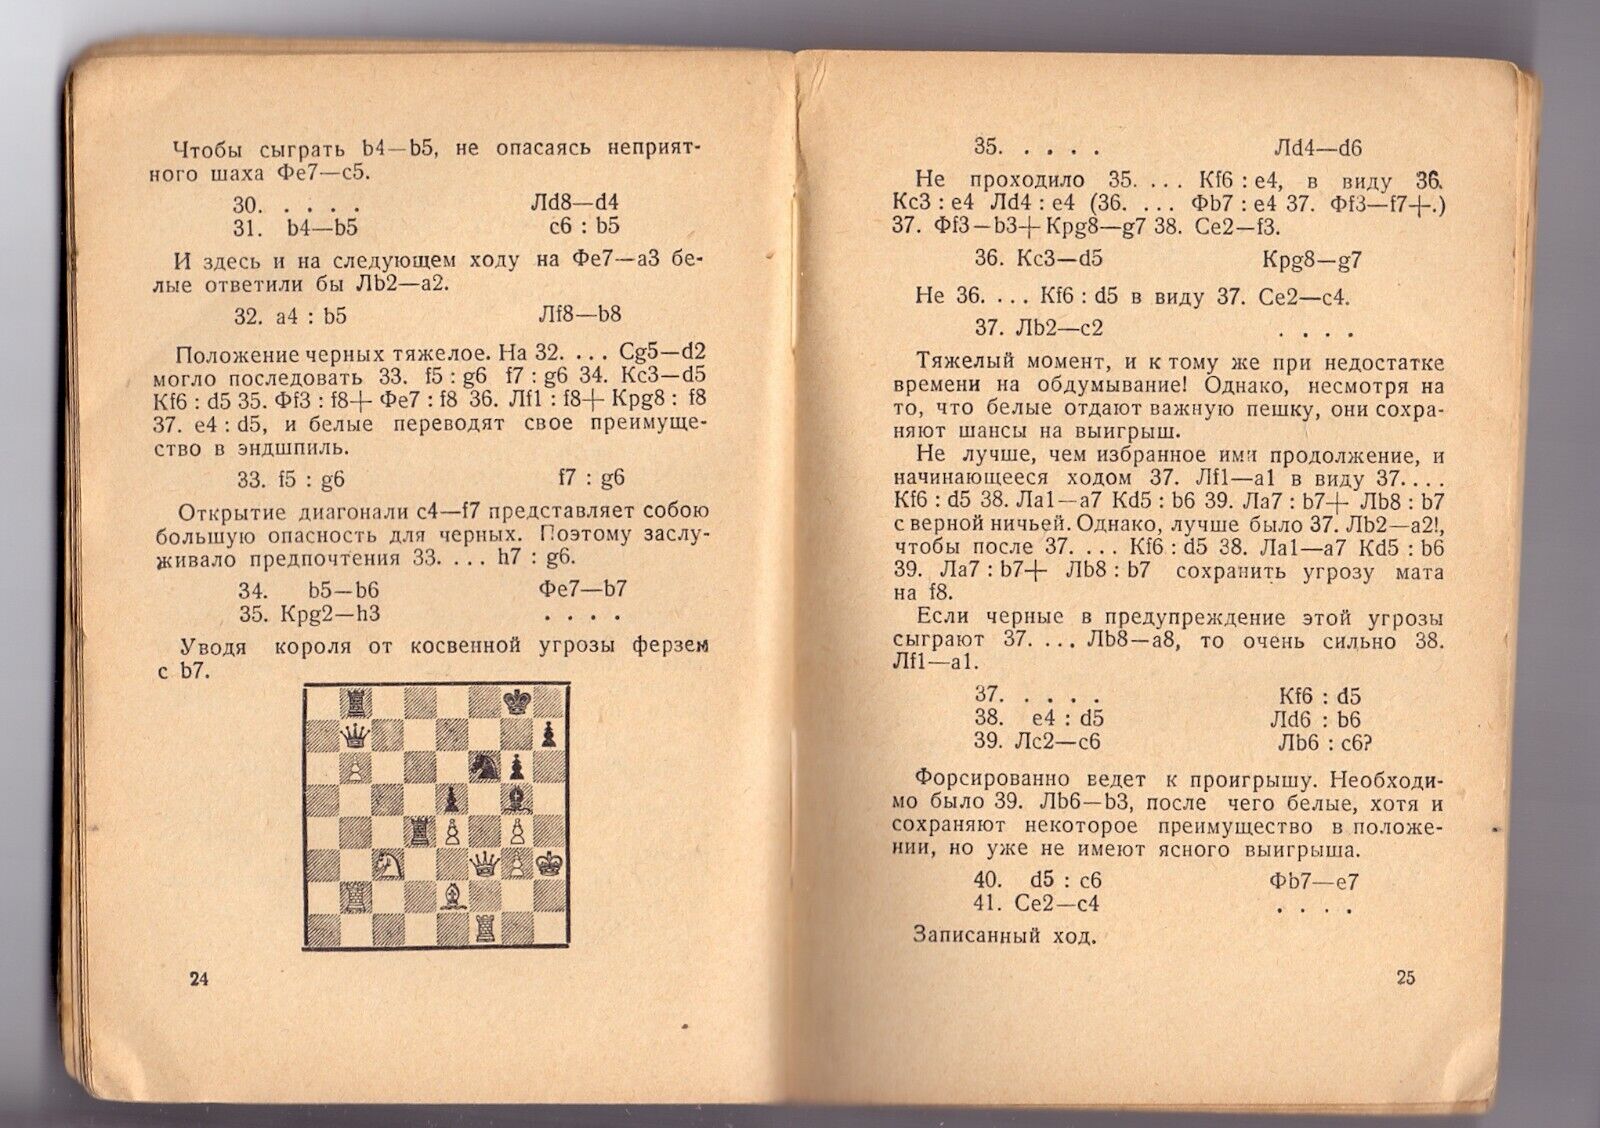 11527.Russian chess book: Levenfish 1936. Alekhine-Euwe world championship